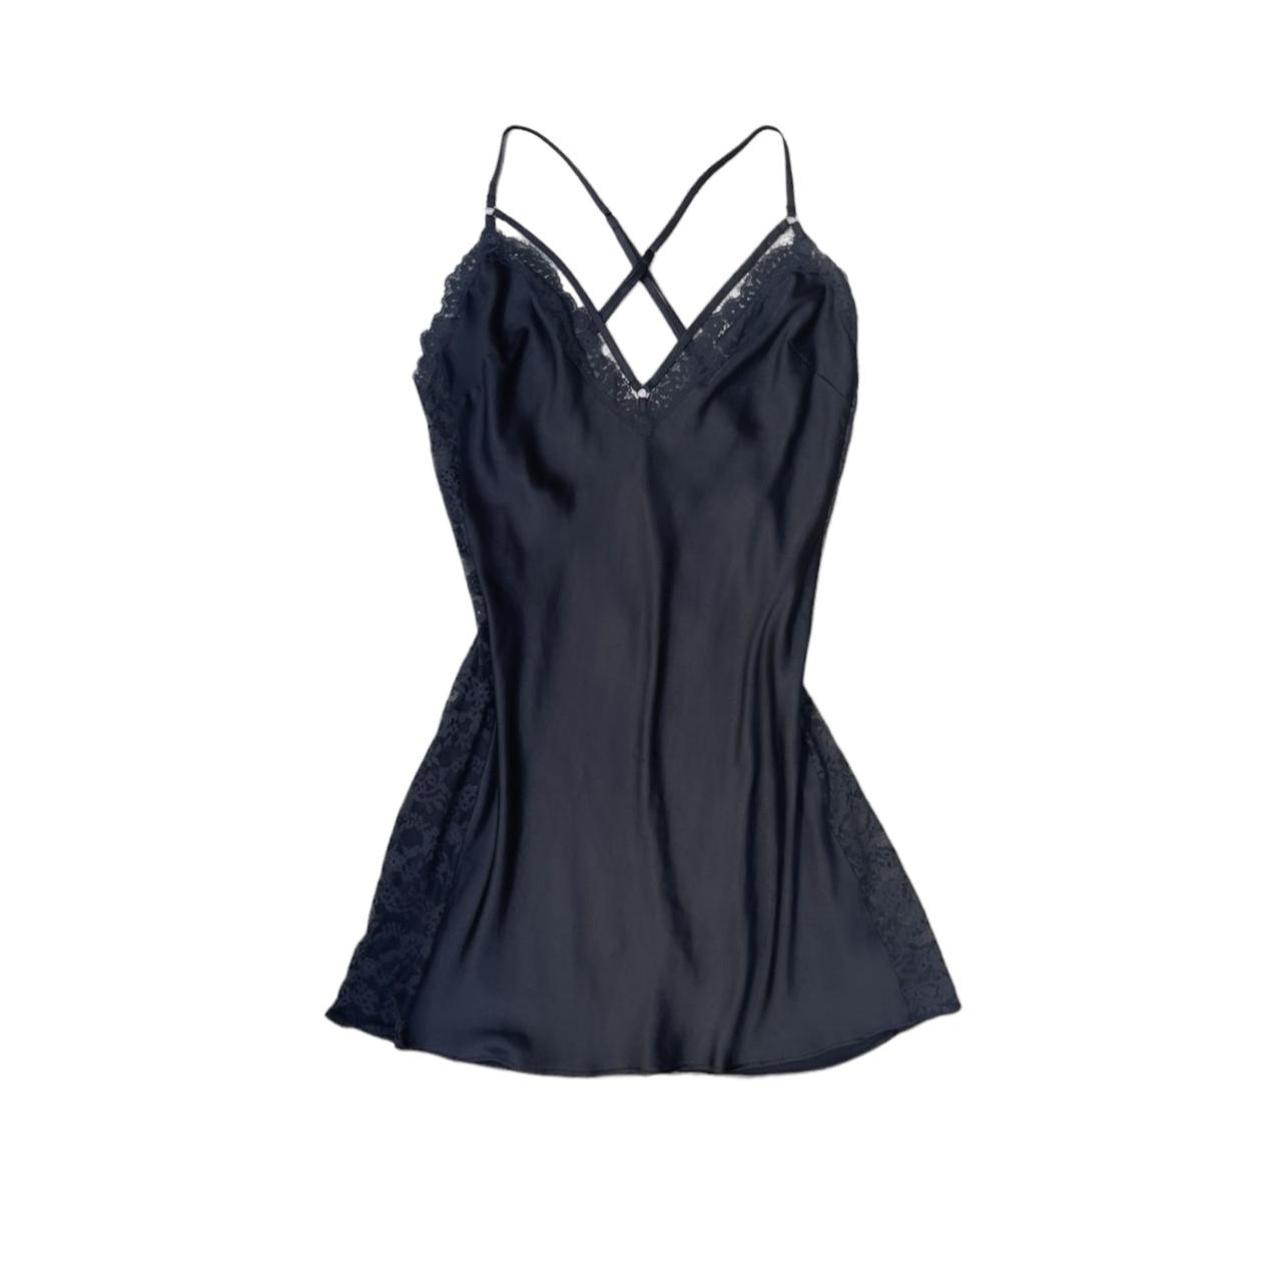 Black satin Victoria dress #blackdress... - Depop